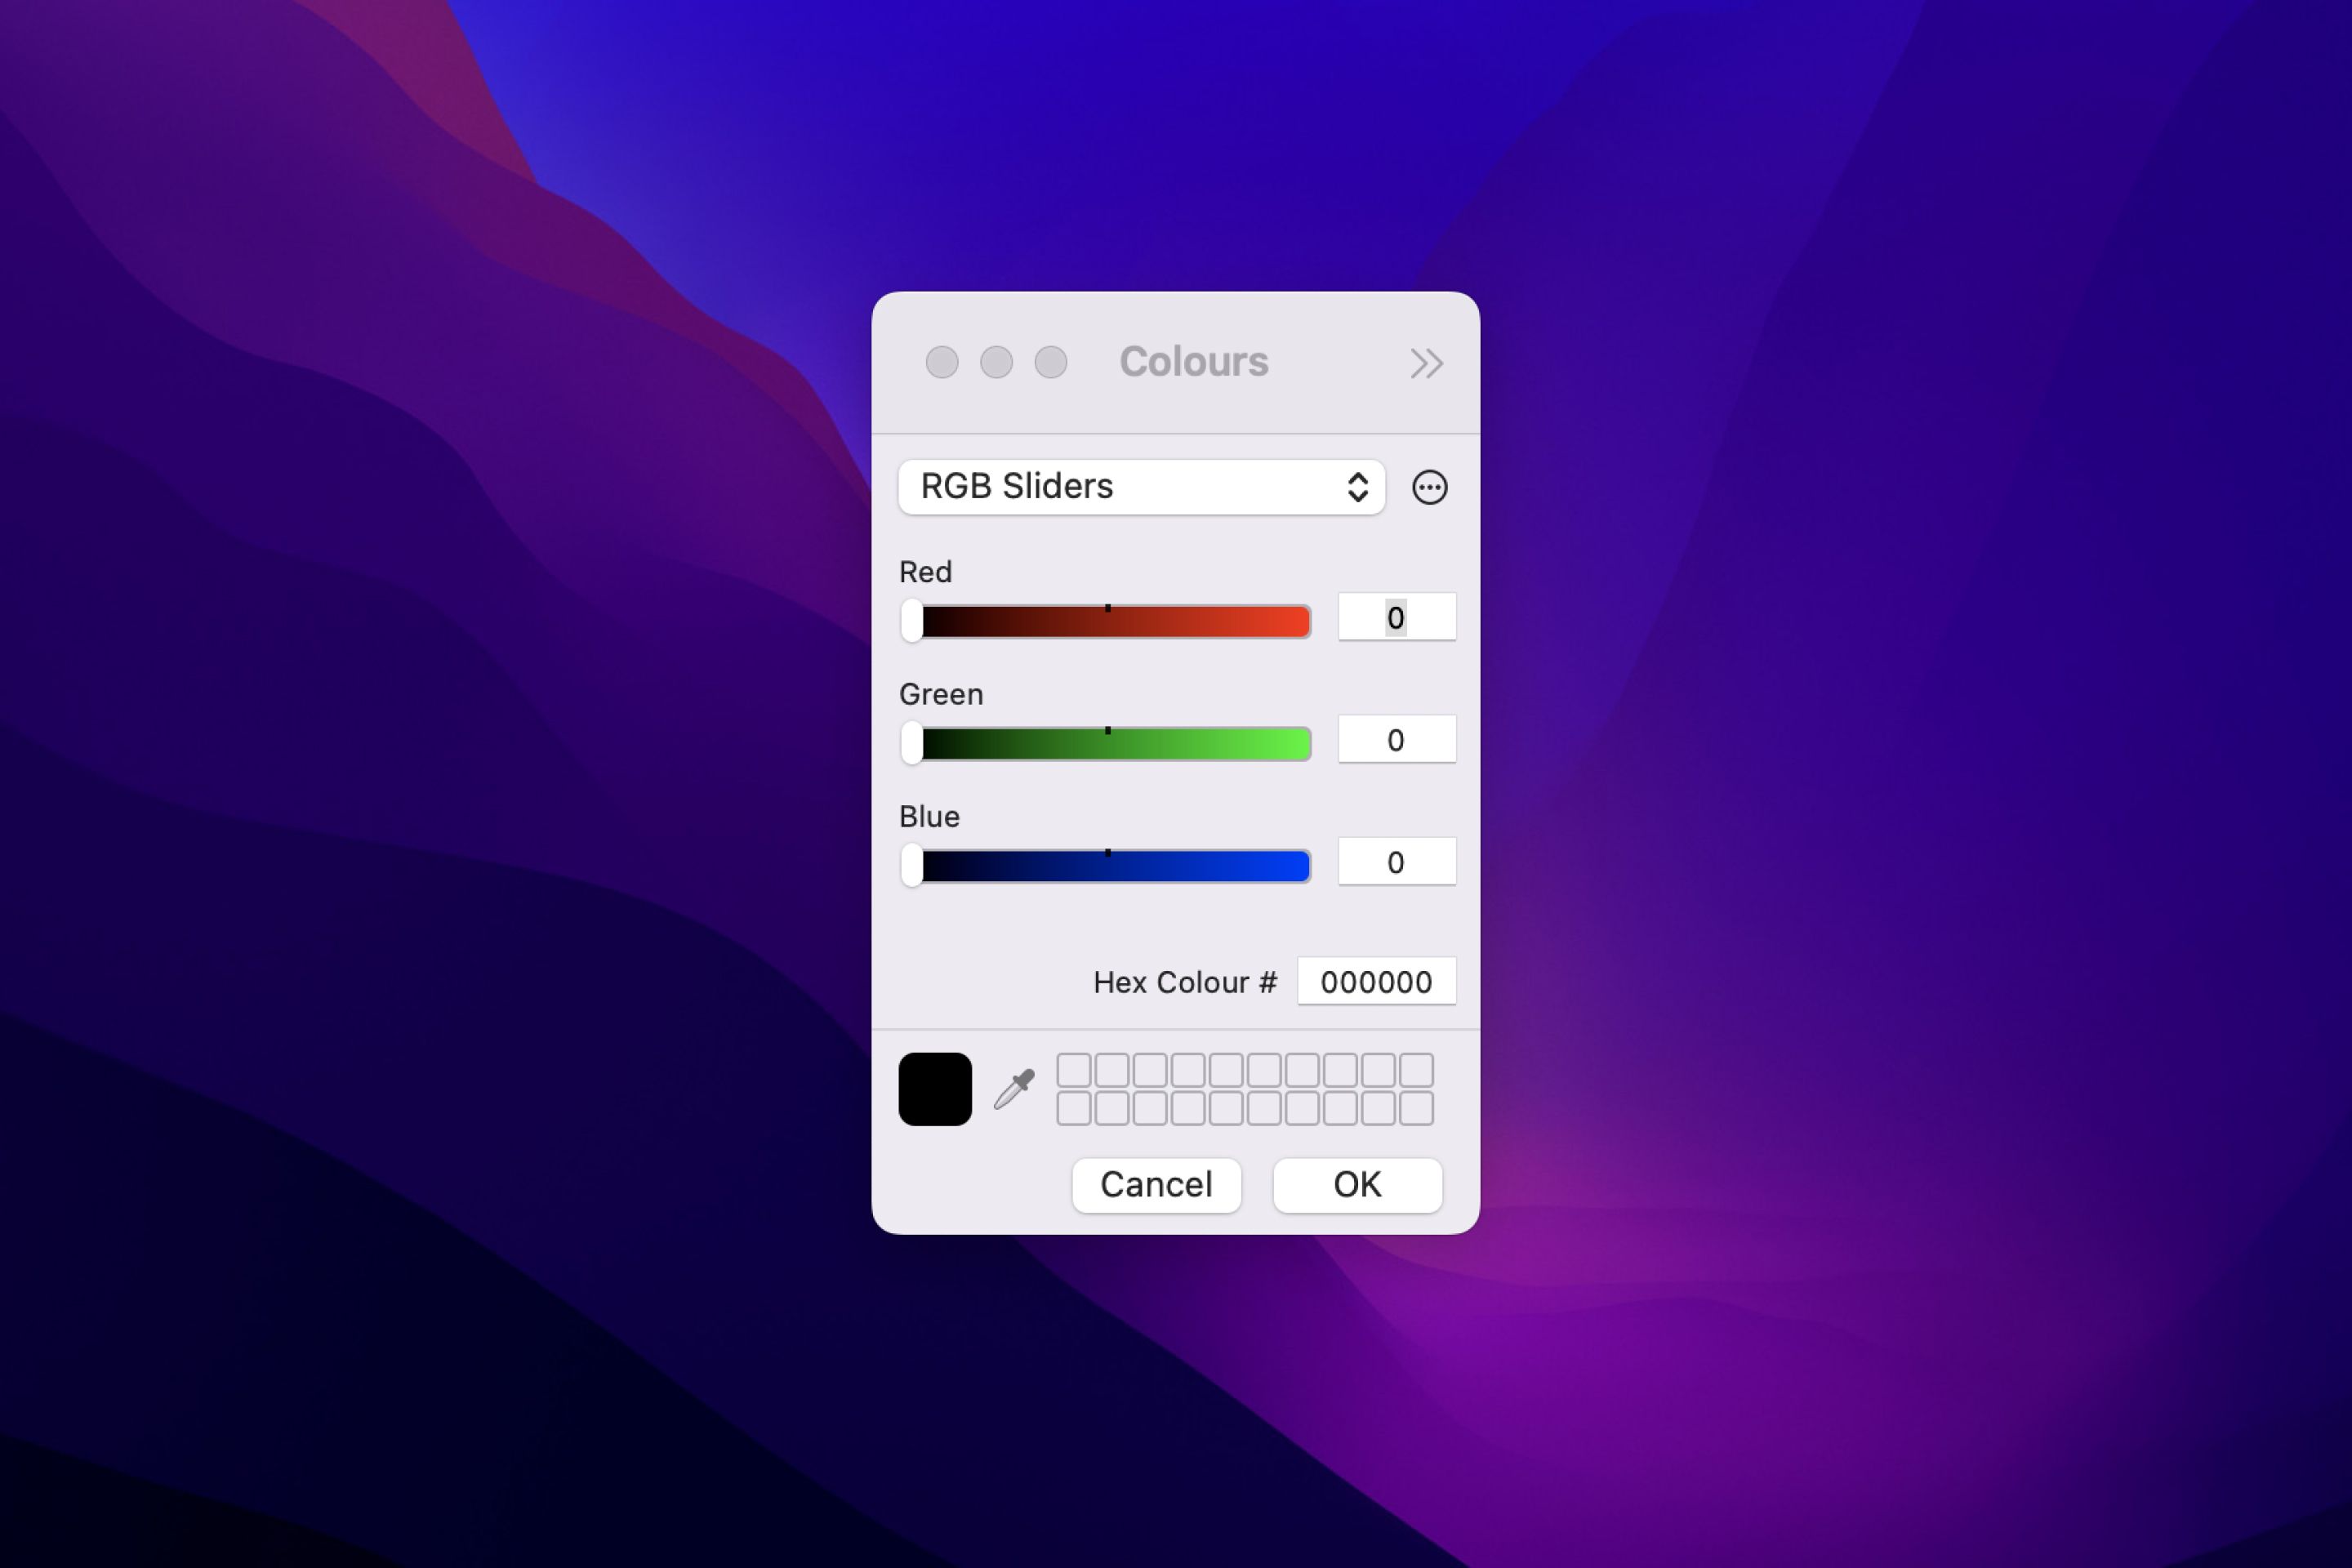 Launch custom macOS color picker app